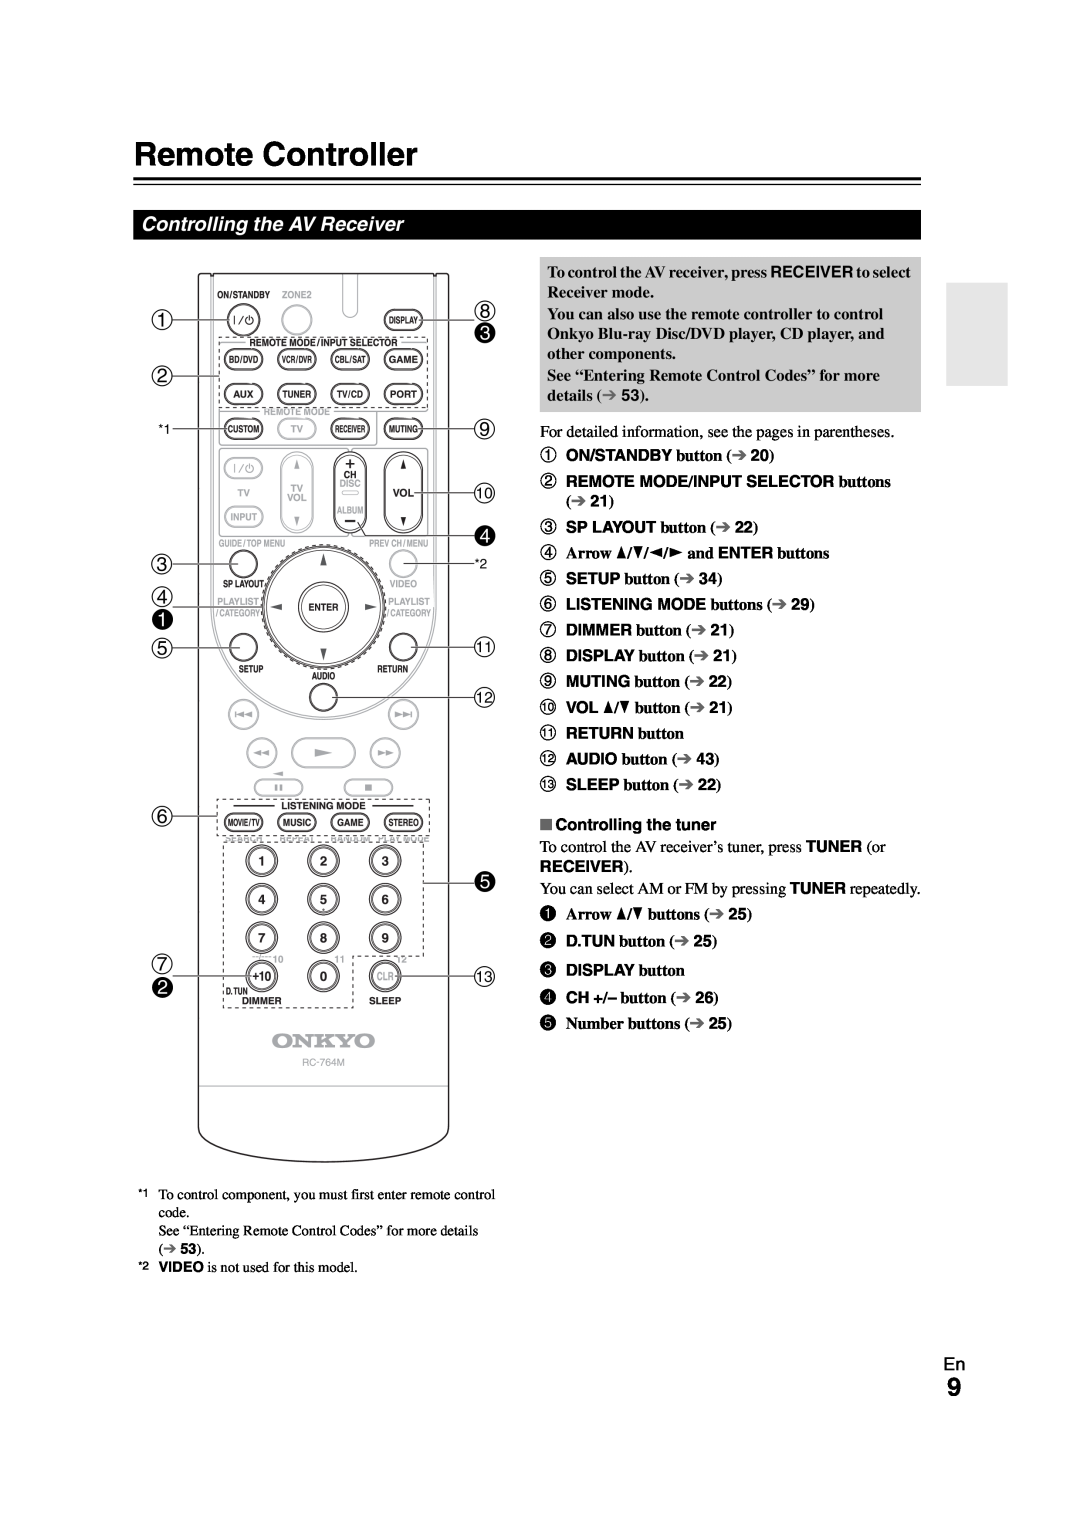 Onkyo TX-SR508 instruction manual Remote Controller 